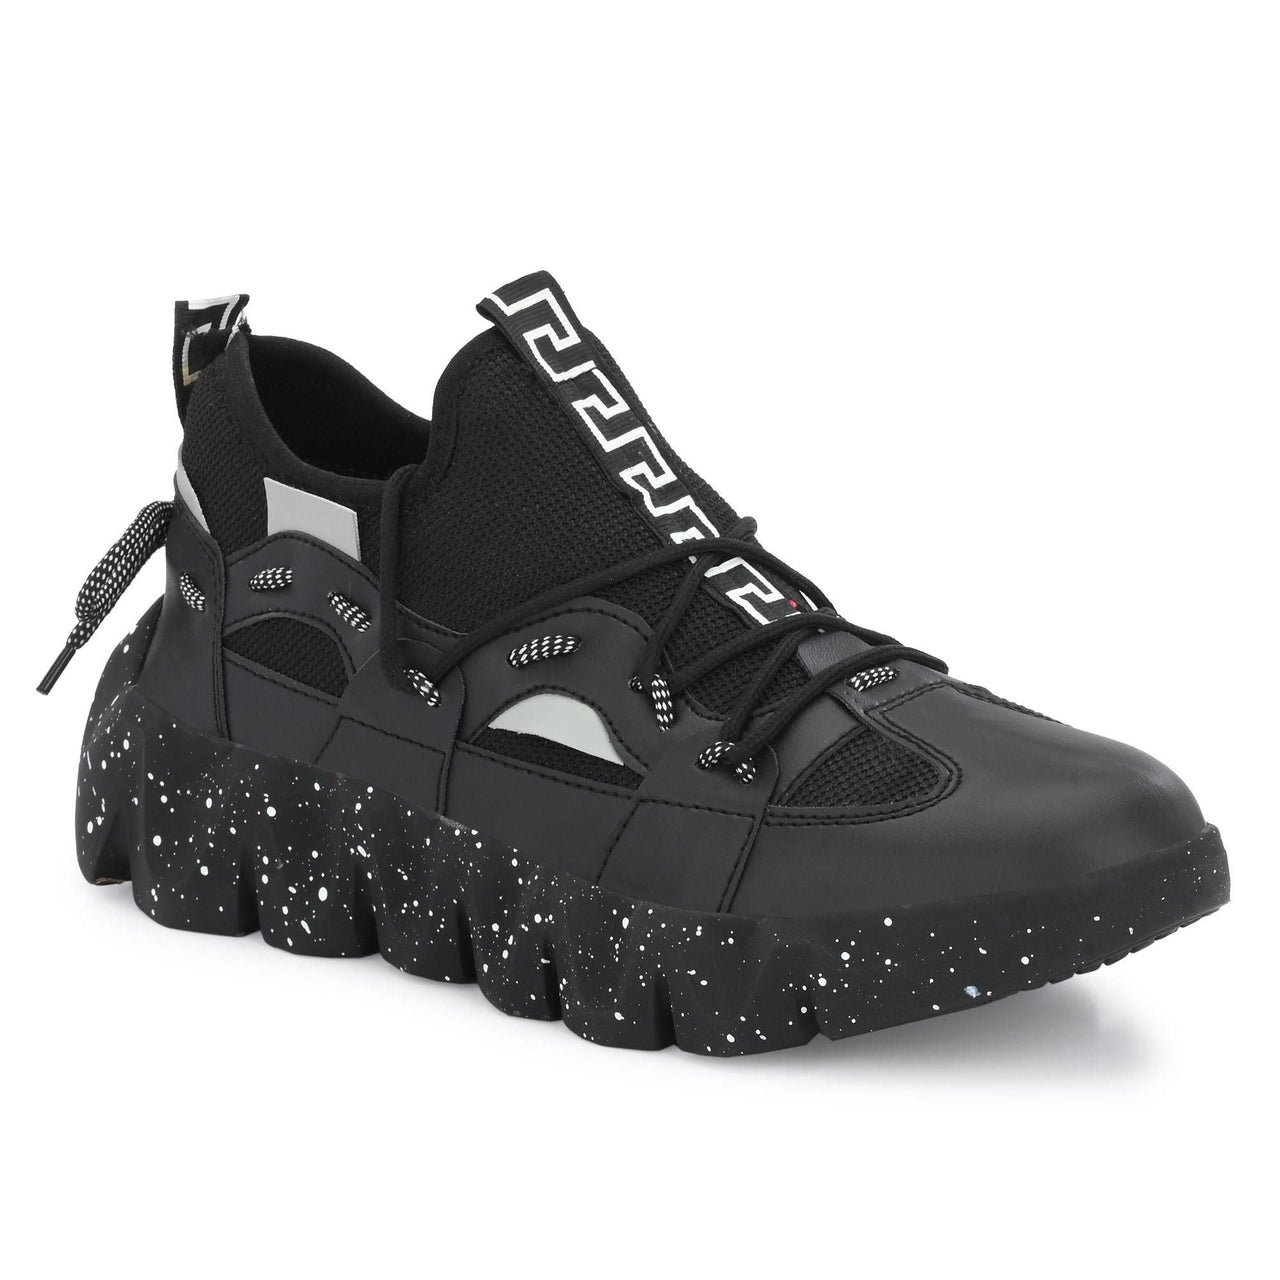 Airbell Black Mesh Lightweight Running Shoes for Men